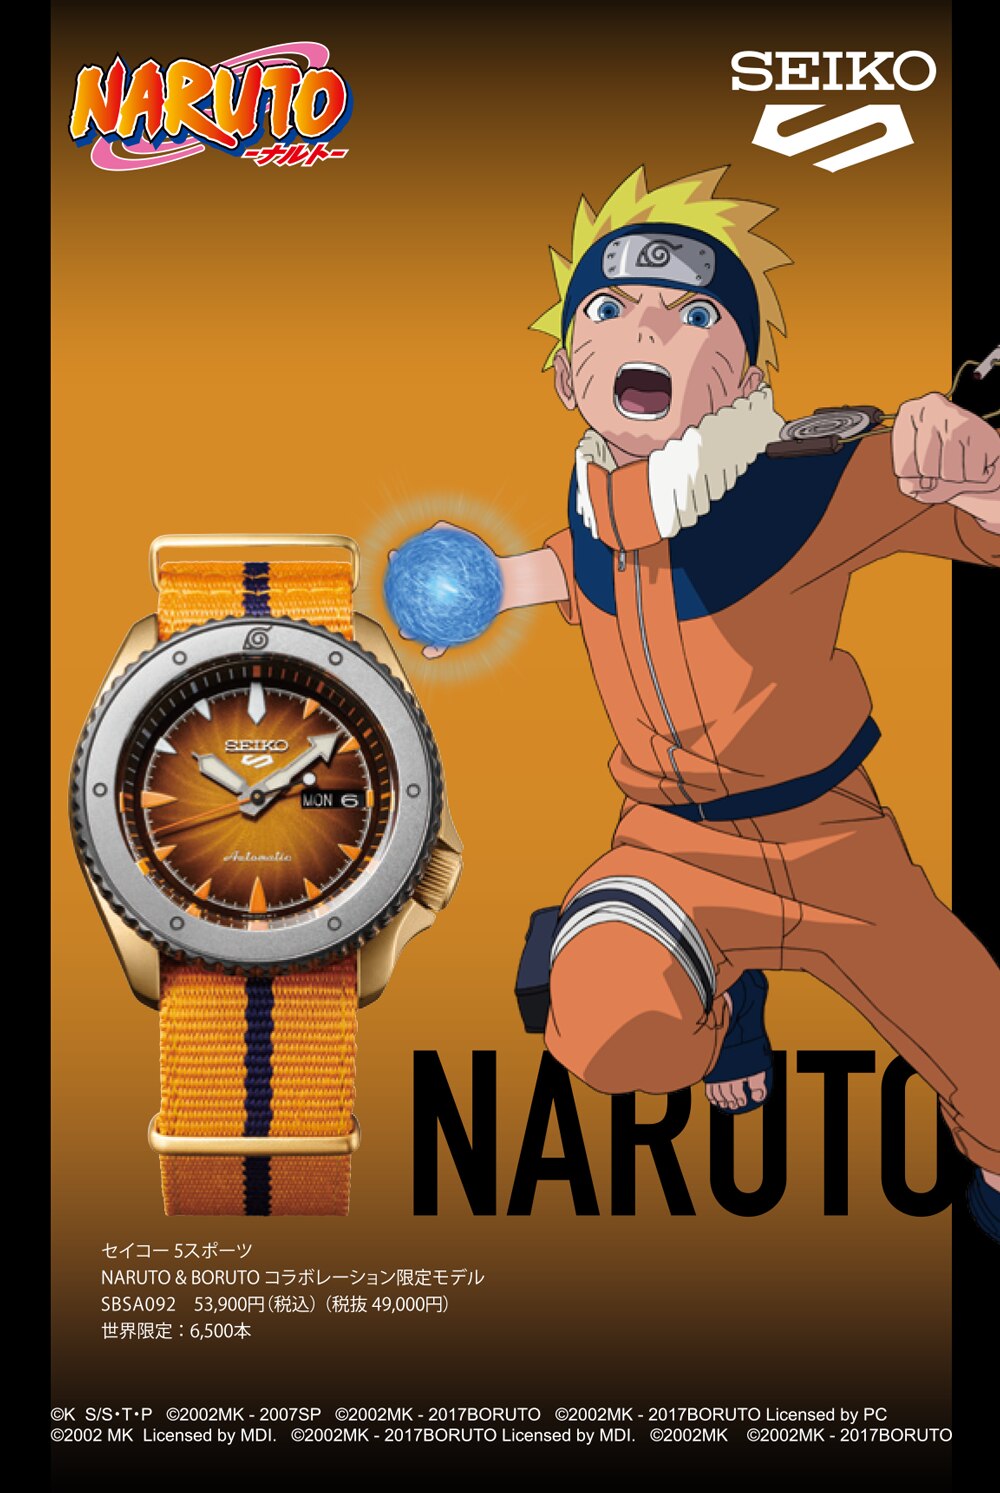 Naruto ナルト Boruto ボルト セイコー5スポーツ コラボレーション限定モデル 時計専門店ザ クロックハウス